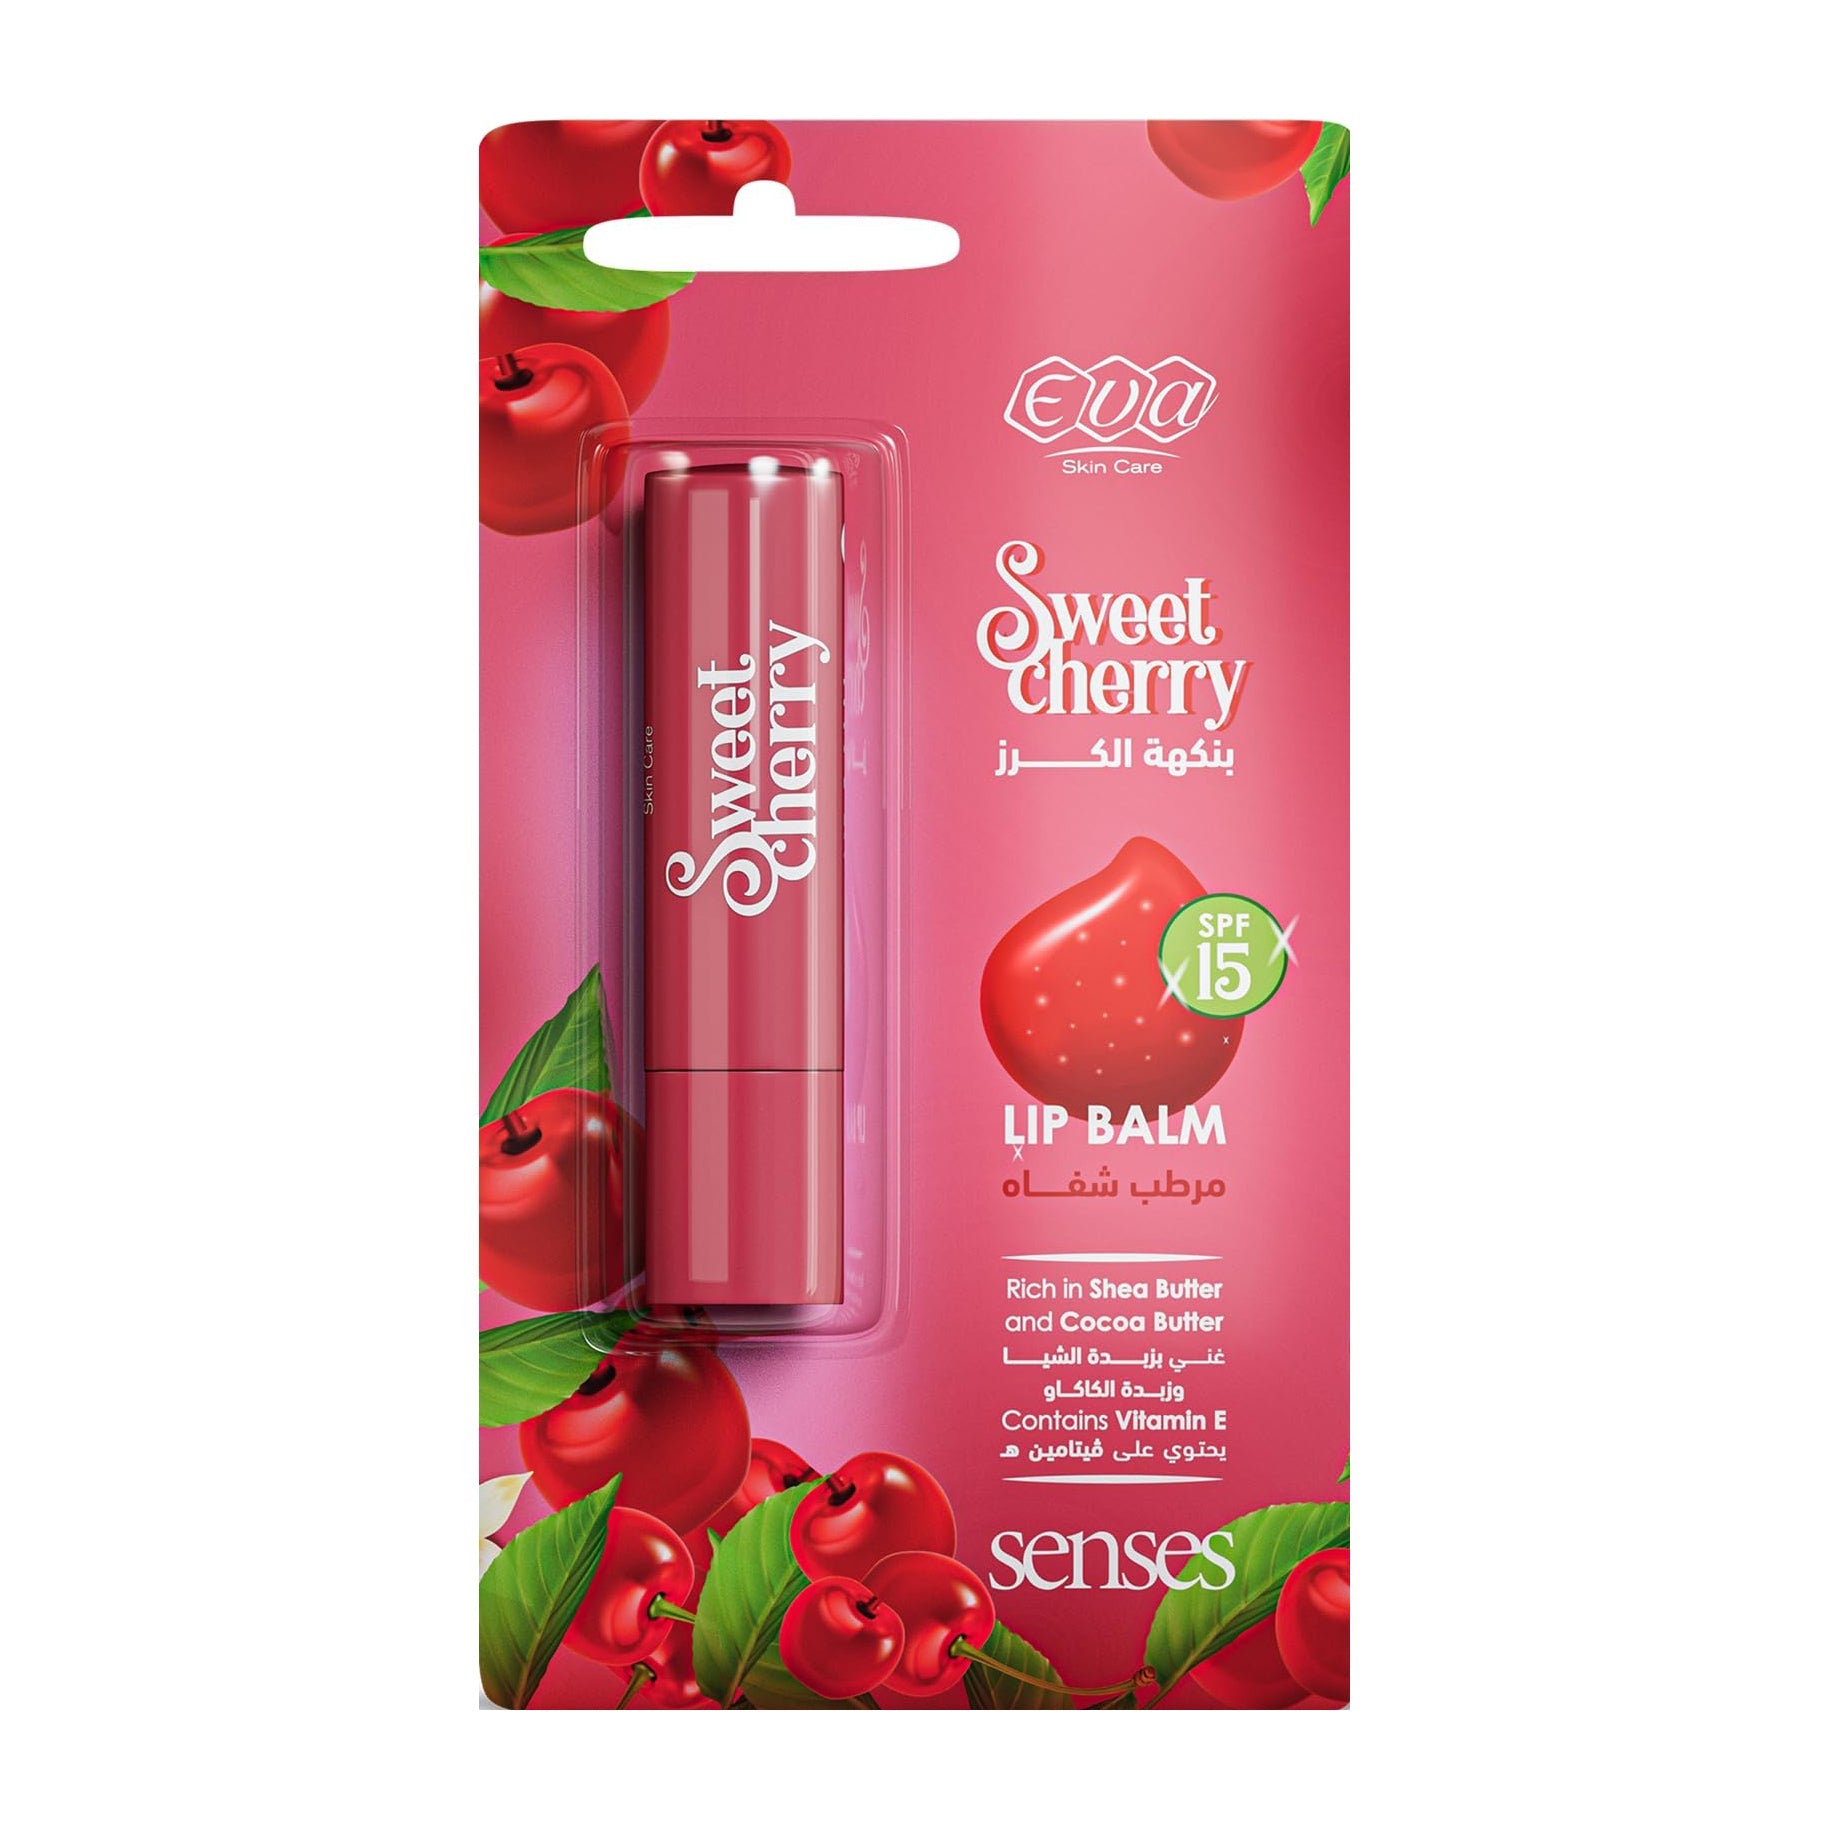 Eva Sweet Cherry SPF 15 Lip Balm - 4gm - Bloom Pharmacy